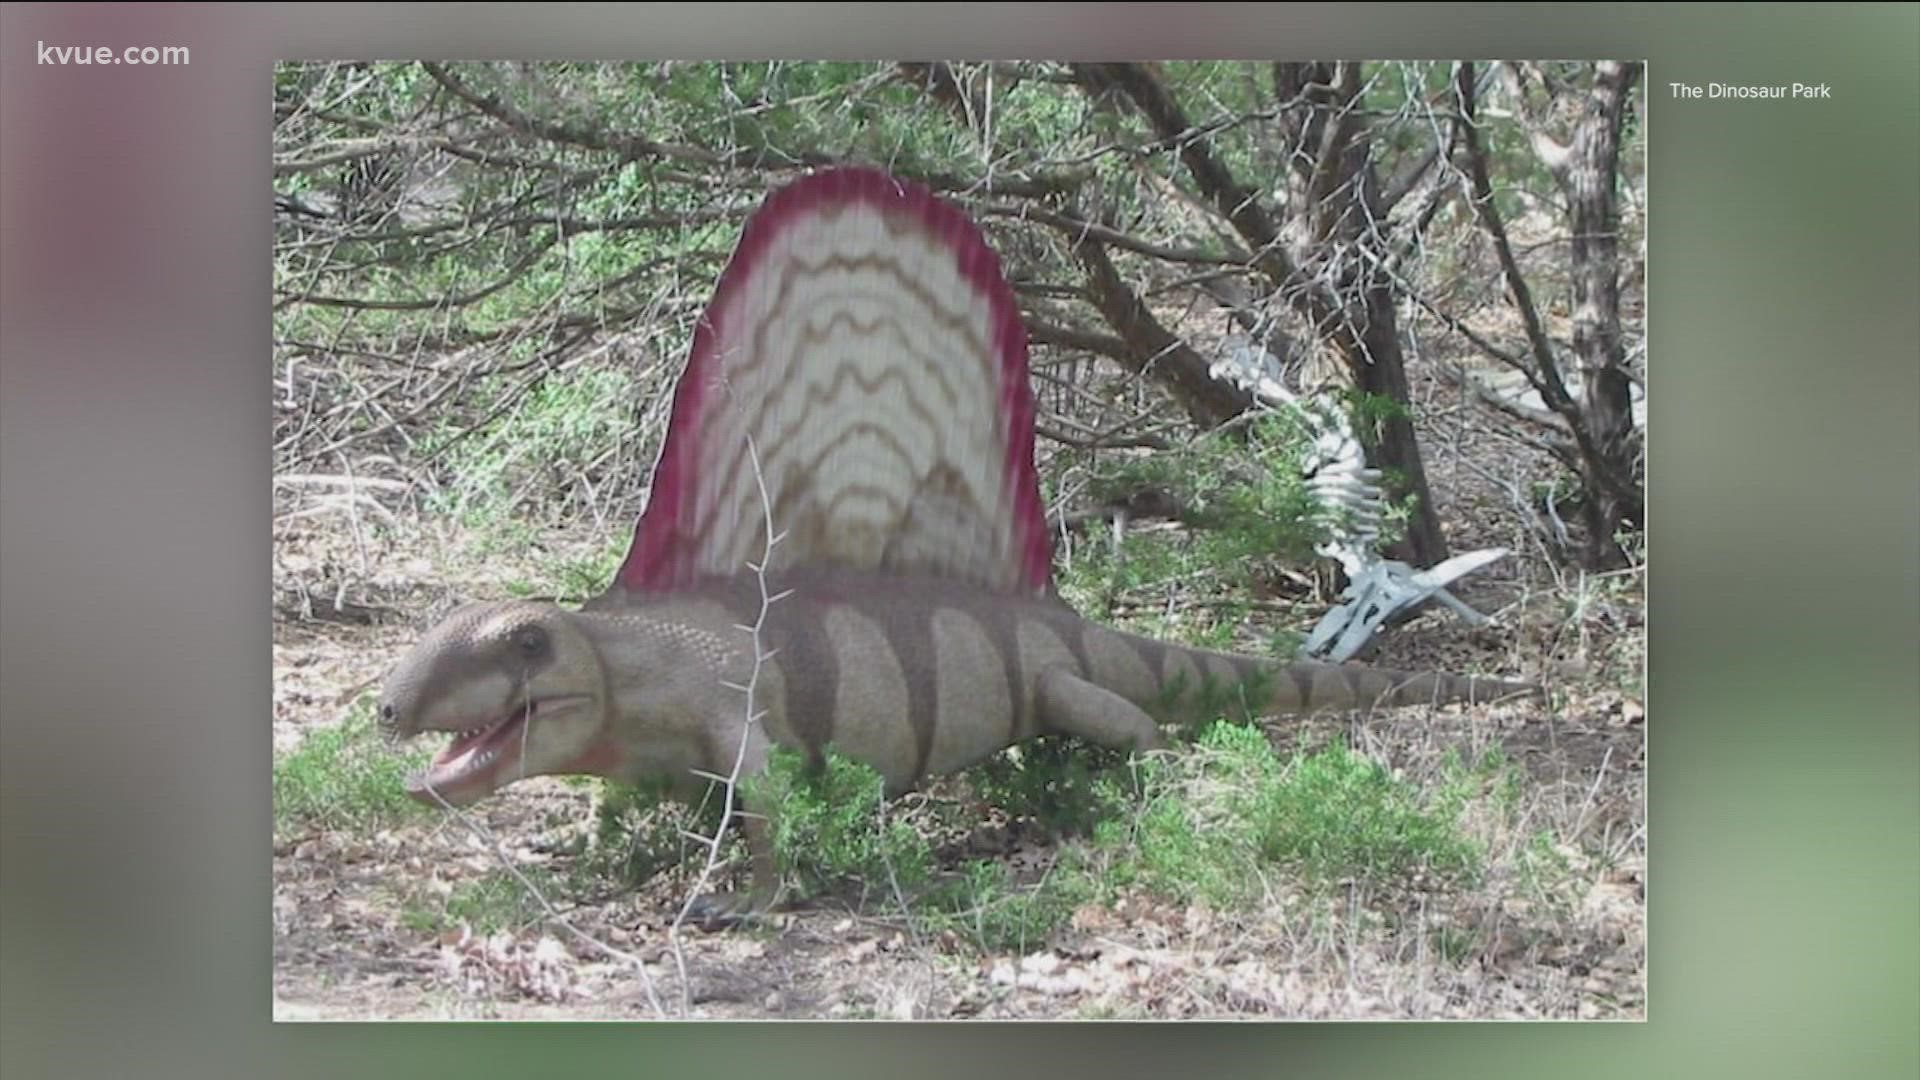 The Dinosaur Park said three dinosaur statues were stolen.